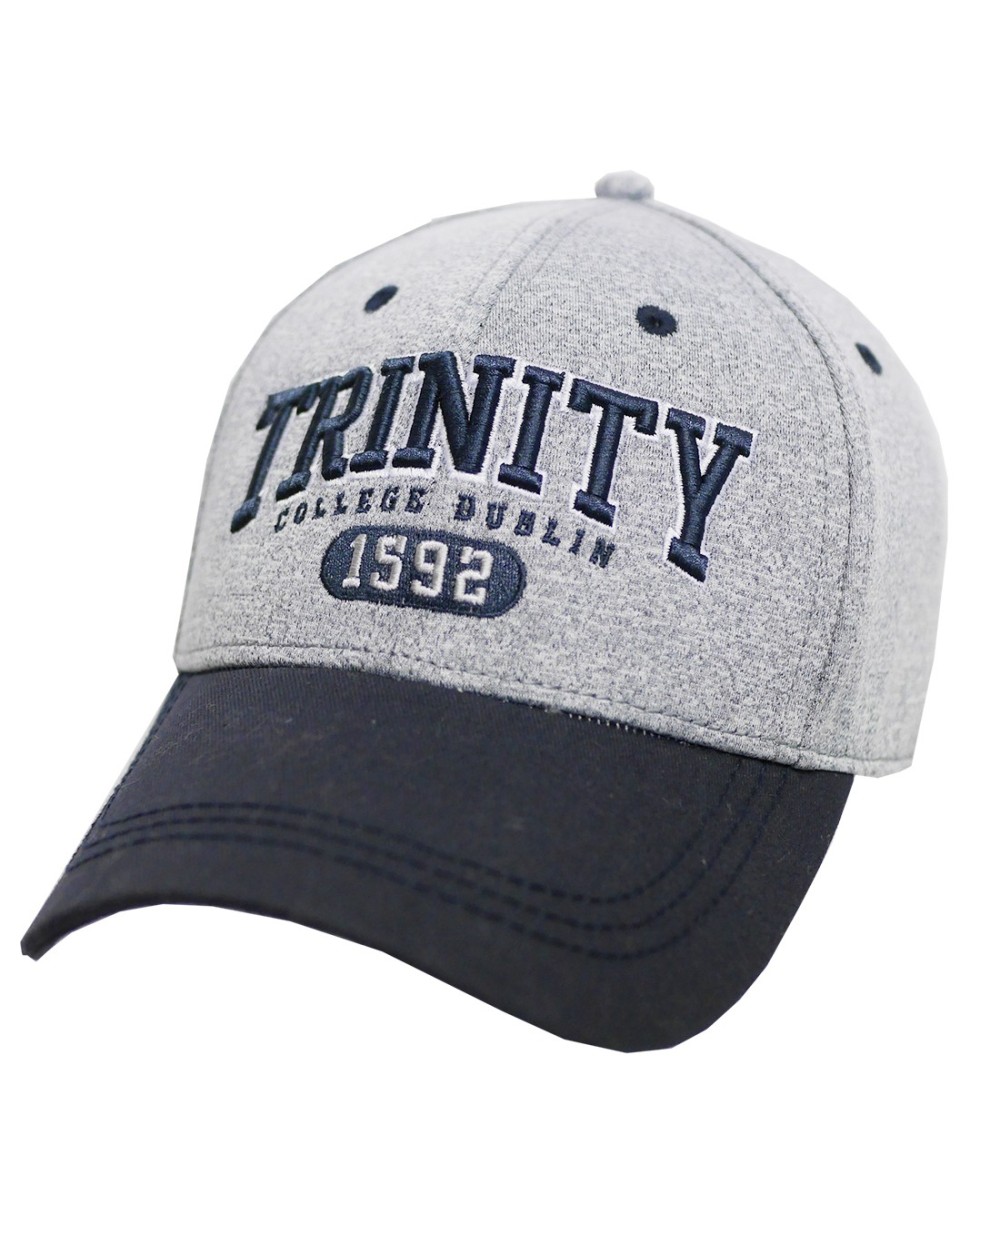 Trinity College Dublin Grey Marl / Navy 1592 Baseball Cap